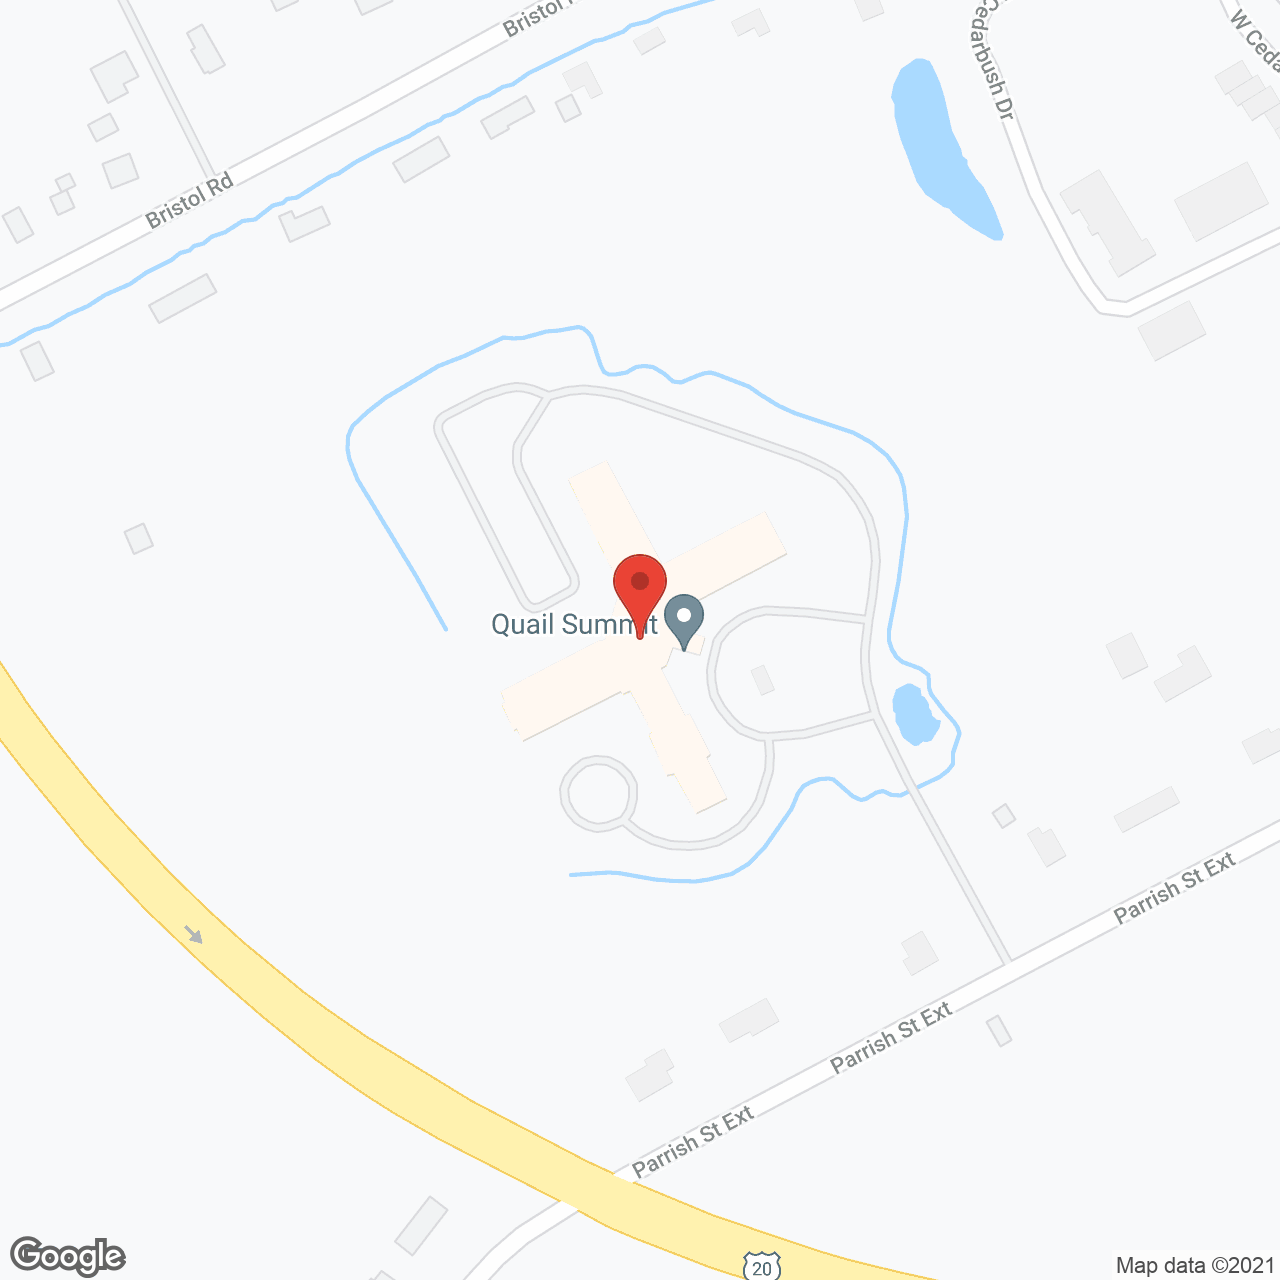 Quail Summit in google map